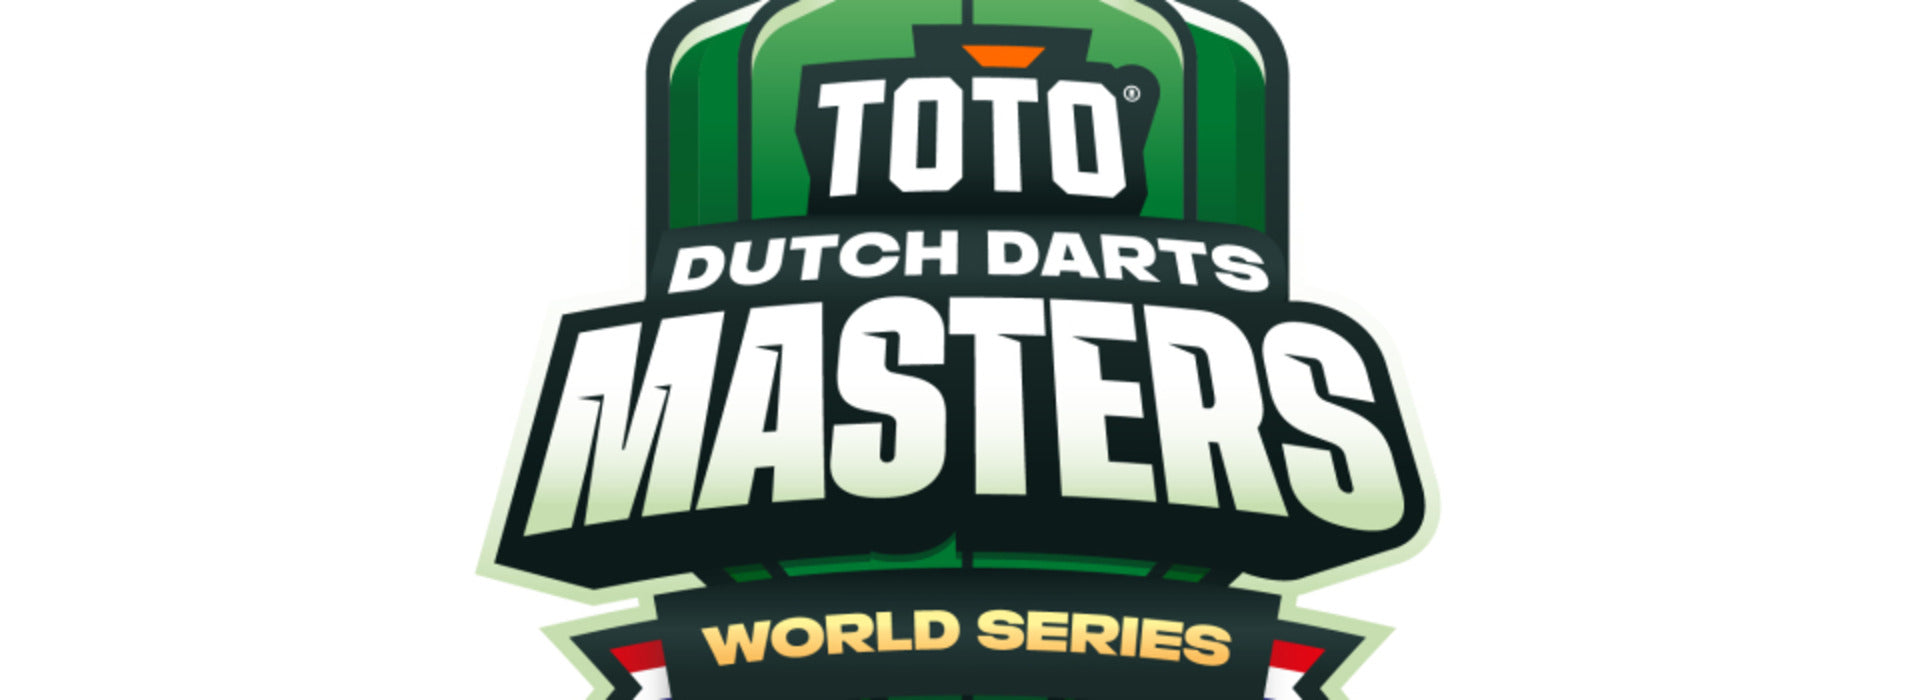 TOTO Dutch Darts Masters Media Release